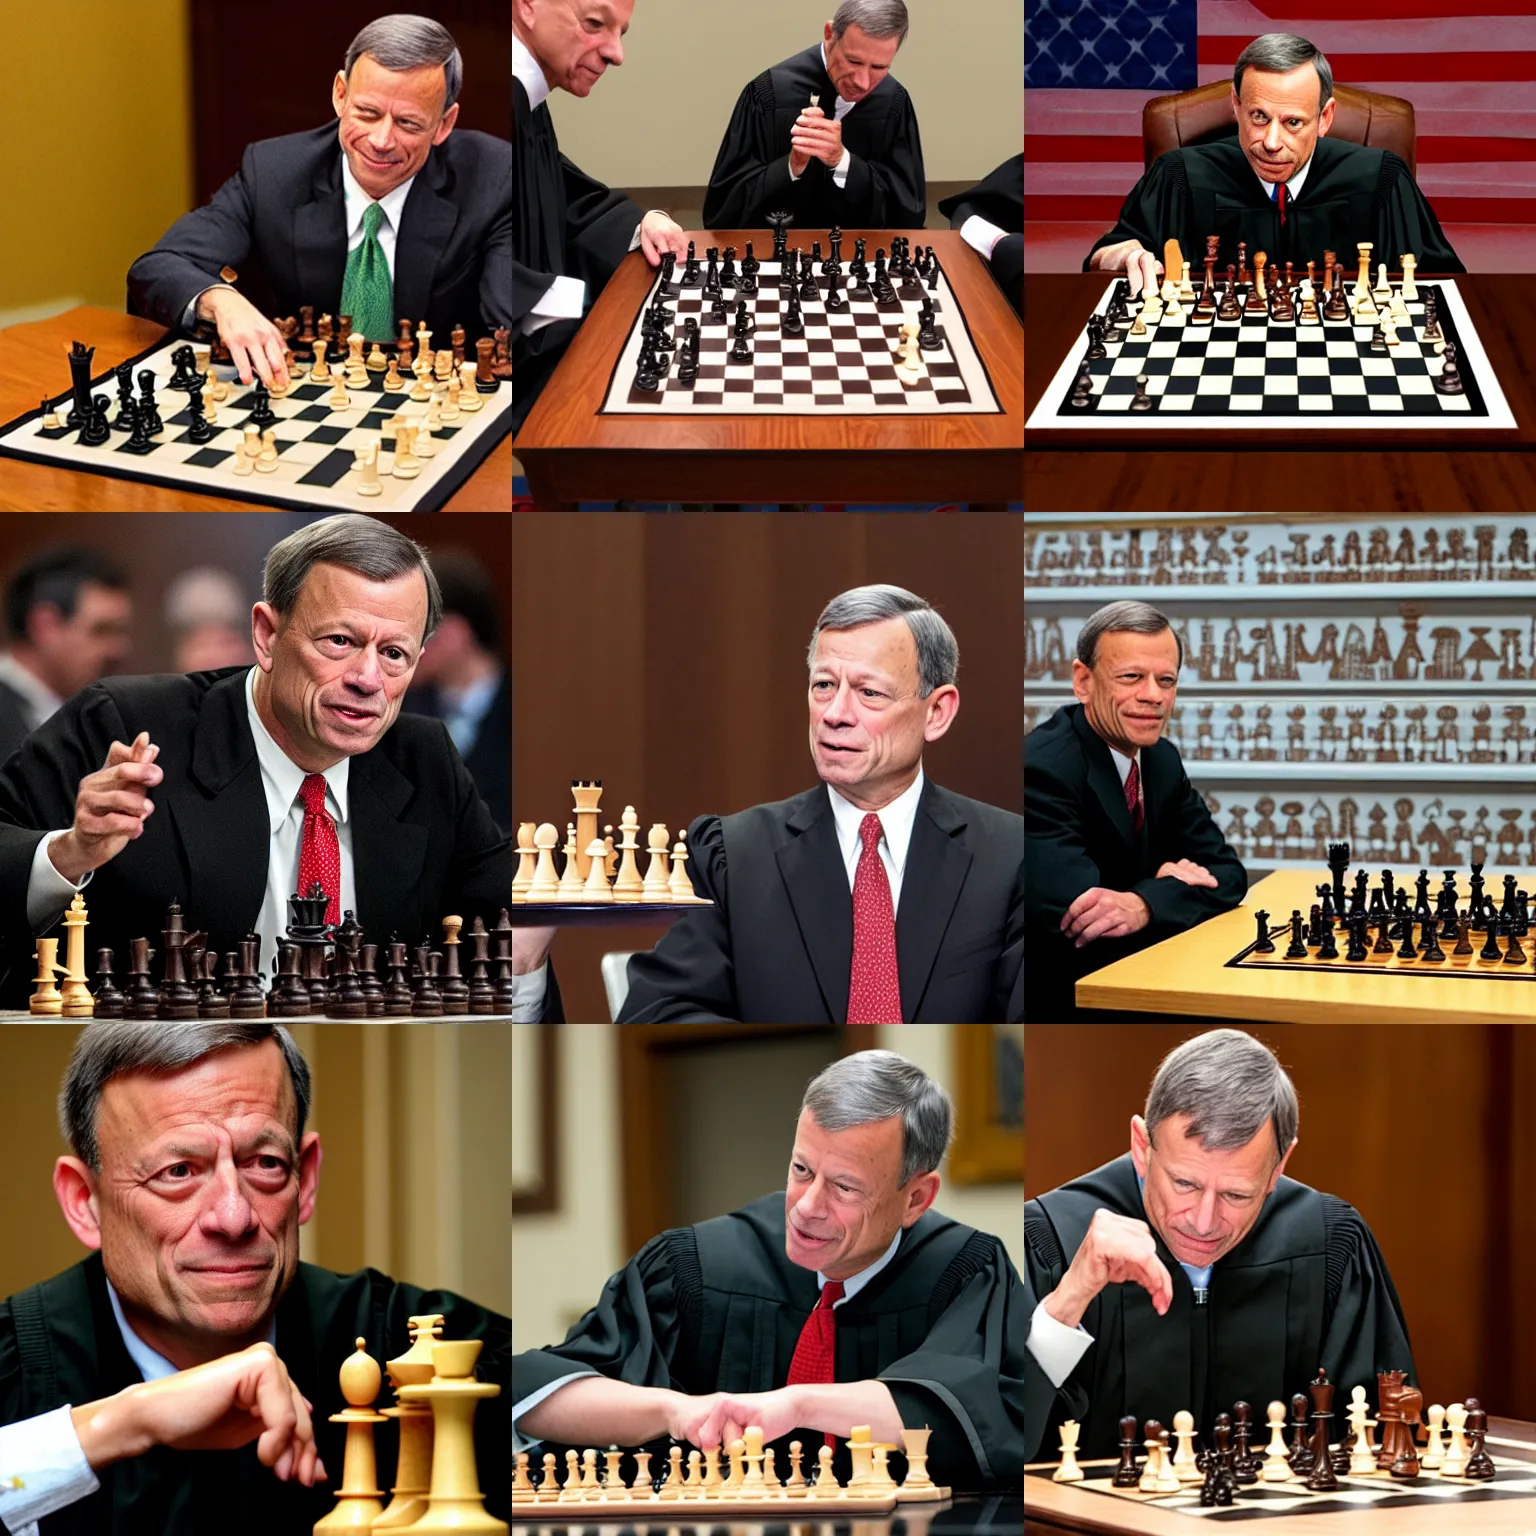 Playing chess with Tzimisce is fun. : r/WorldofDankmemes